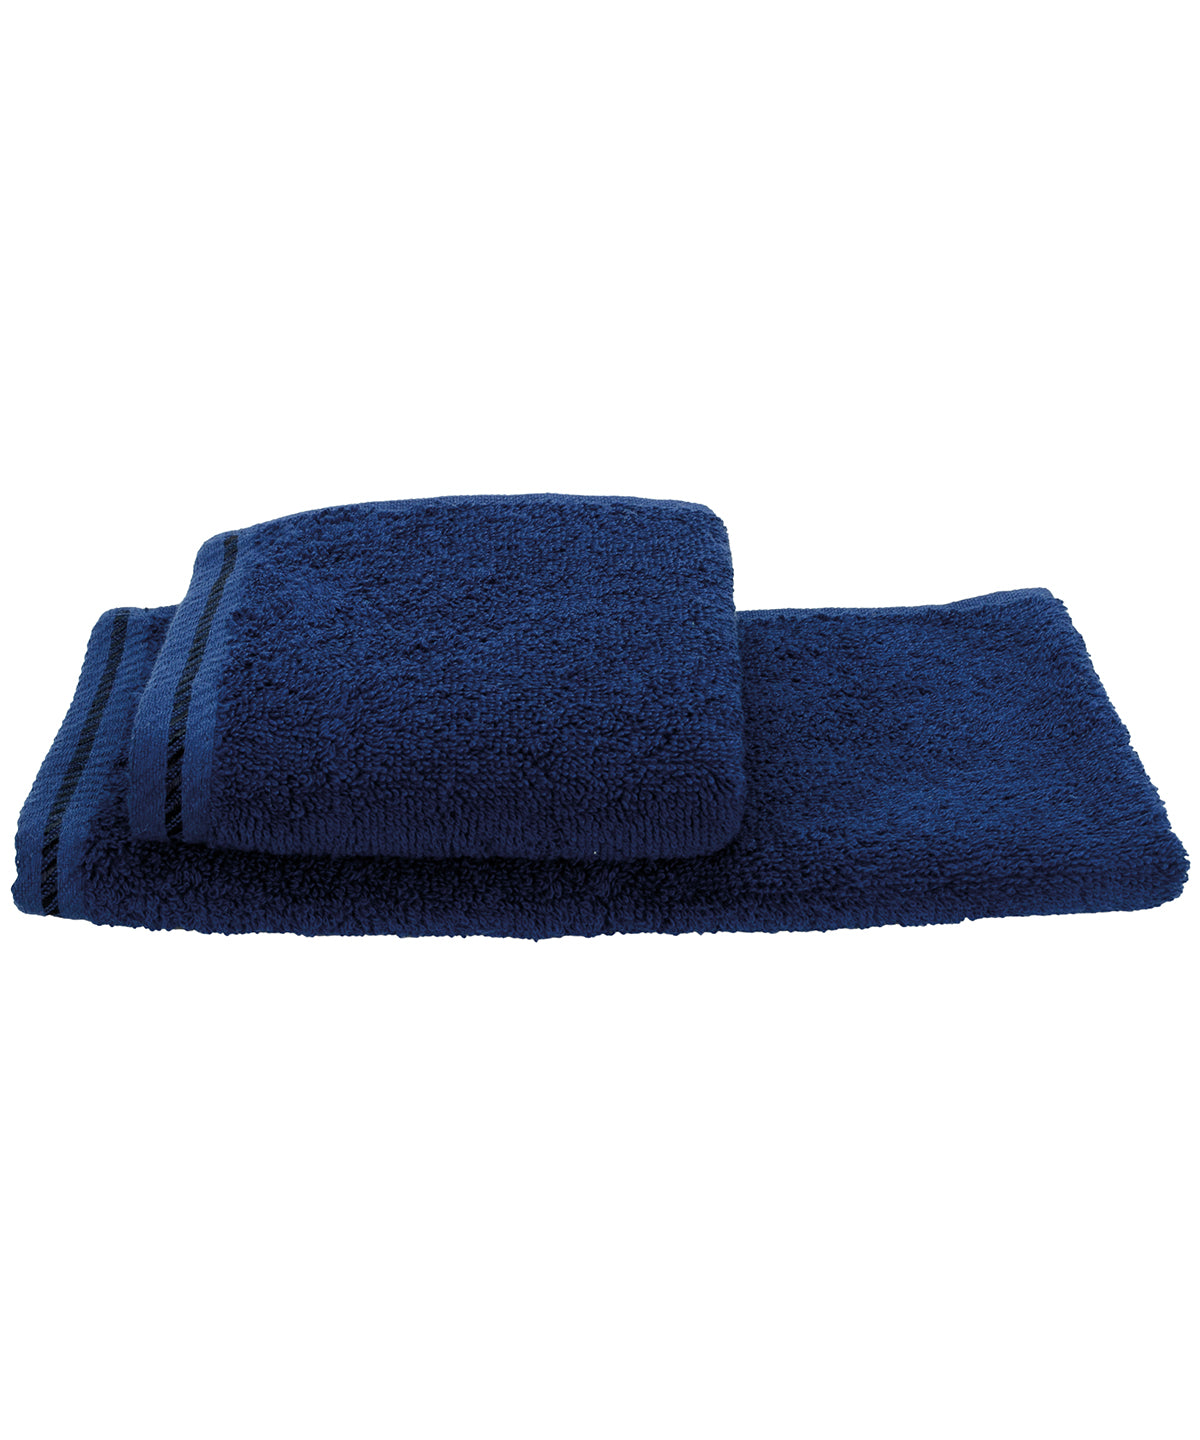 Personalised Towels - Navy A&R Towels ARTG® Guest towel